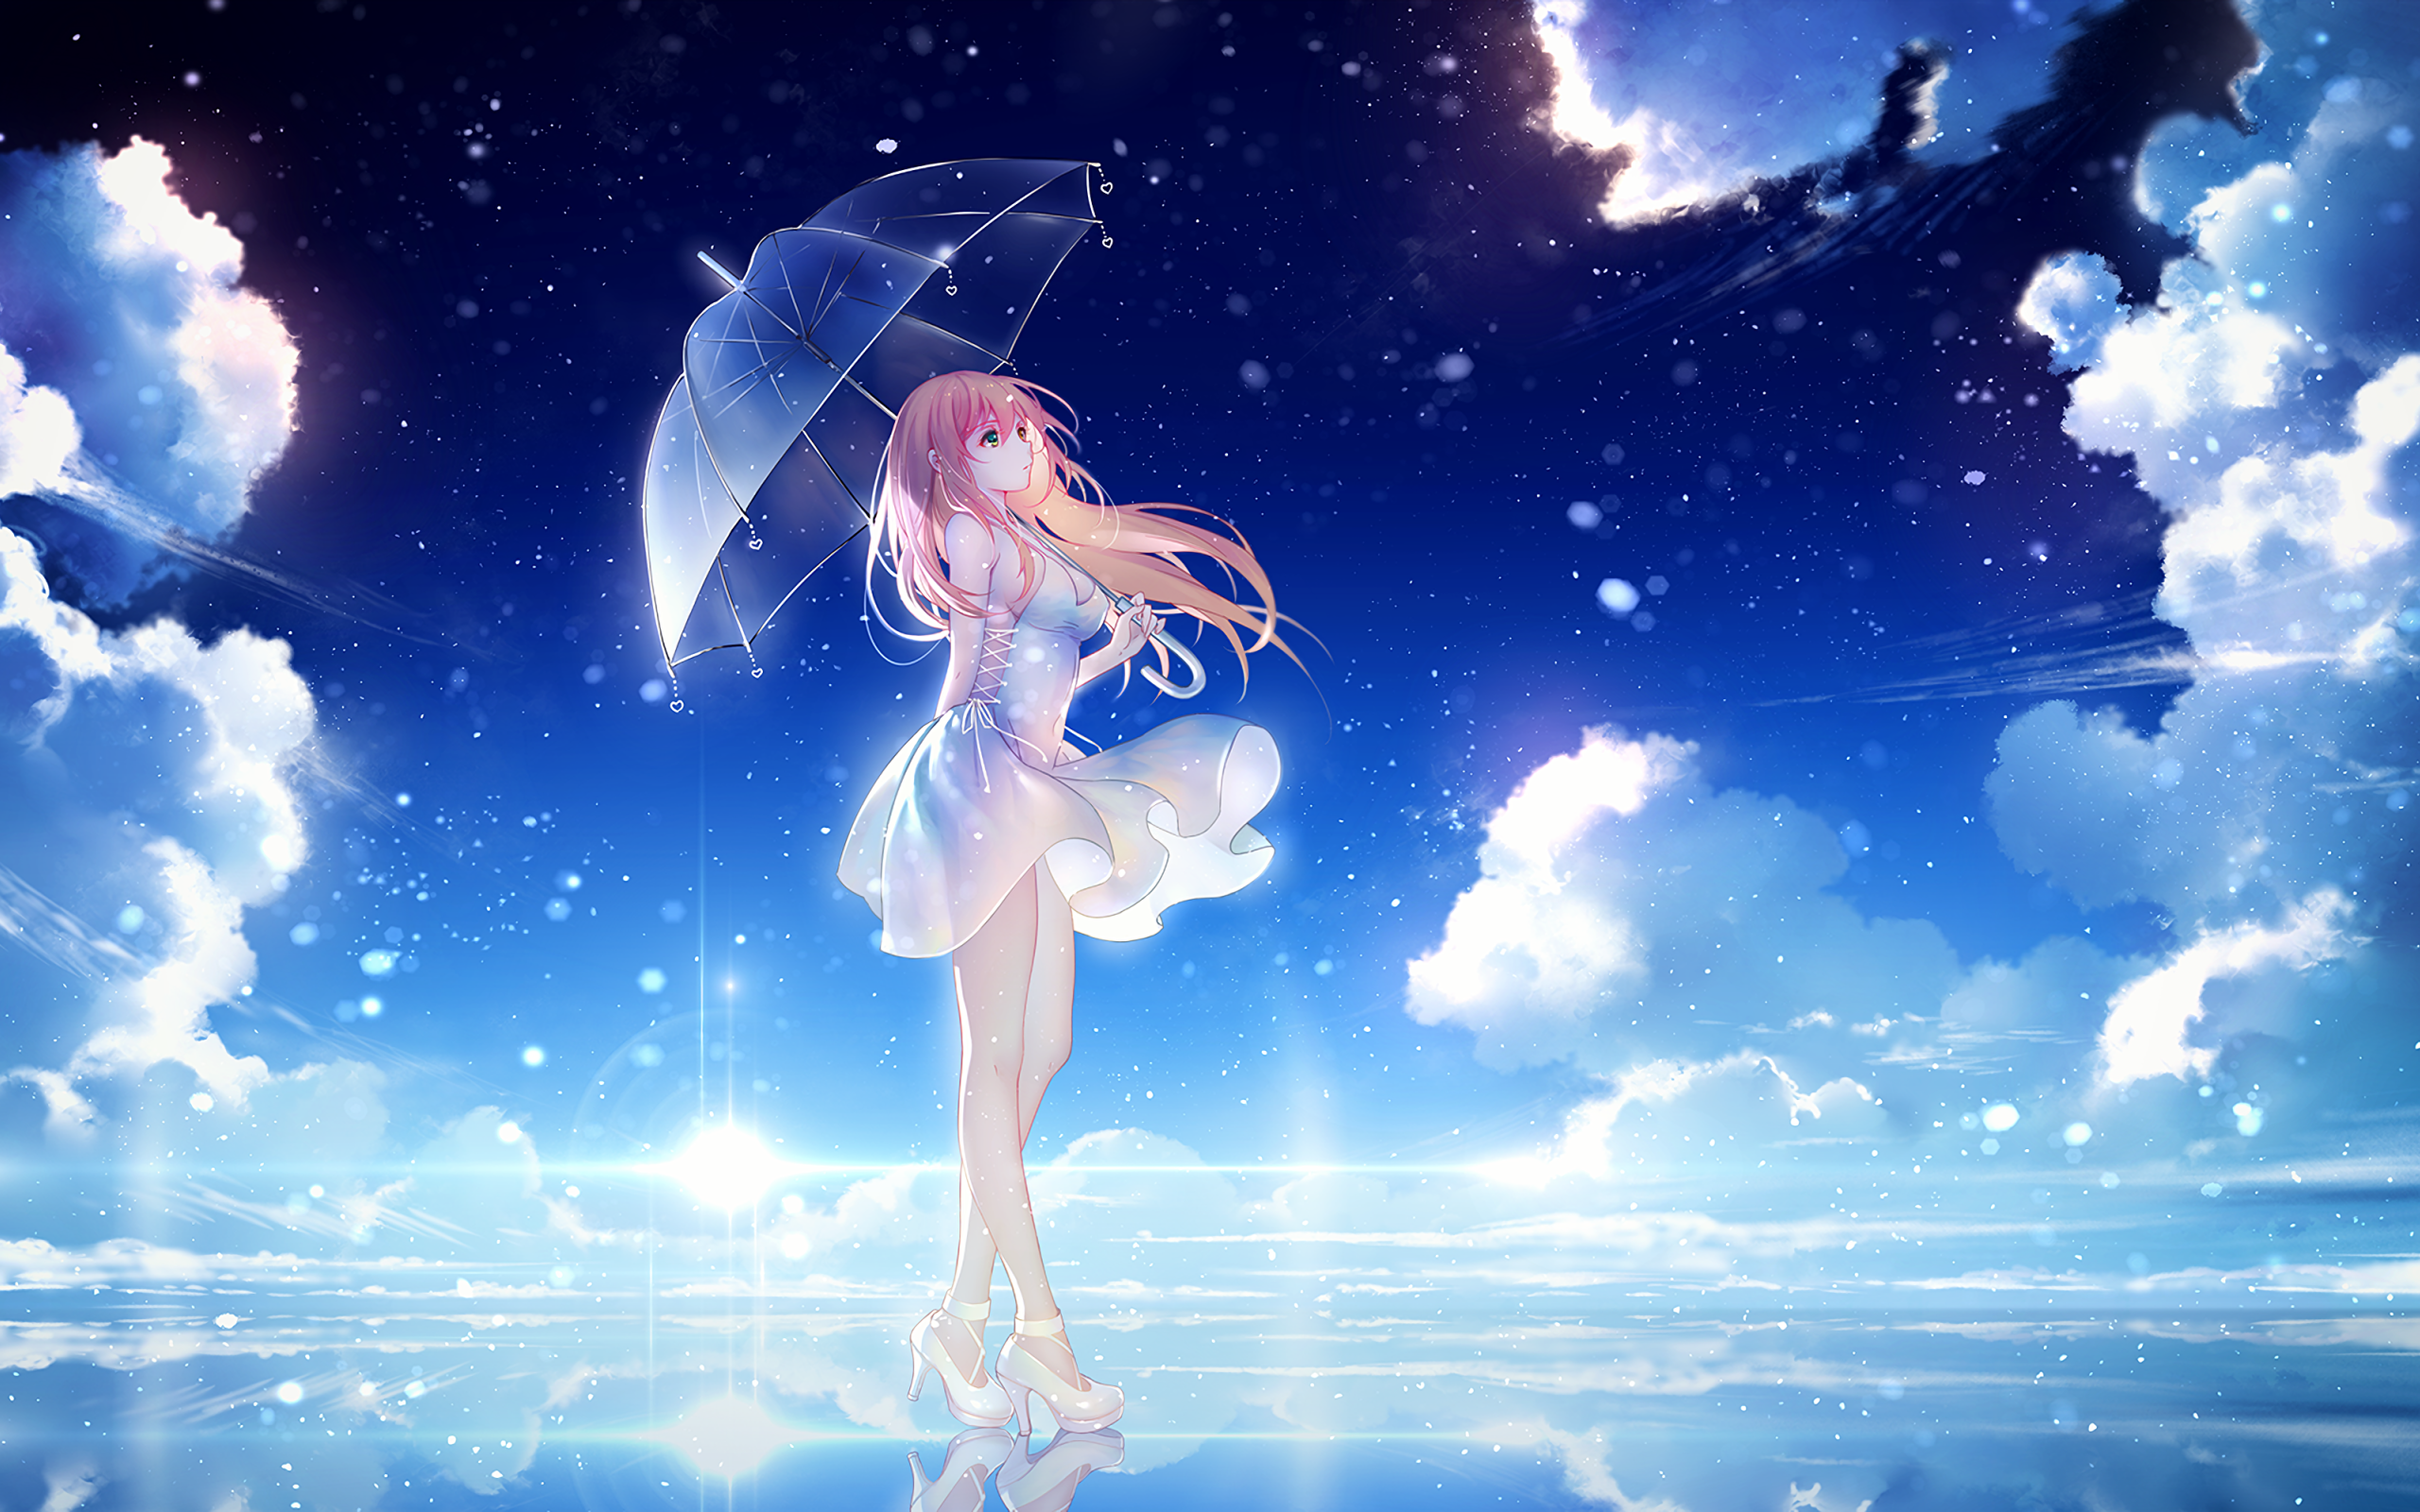 Beautiful anime girl under an umbrella against the sky